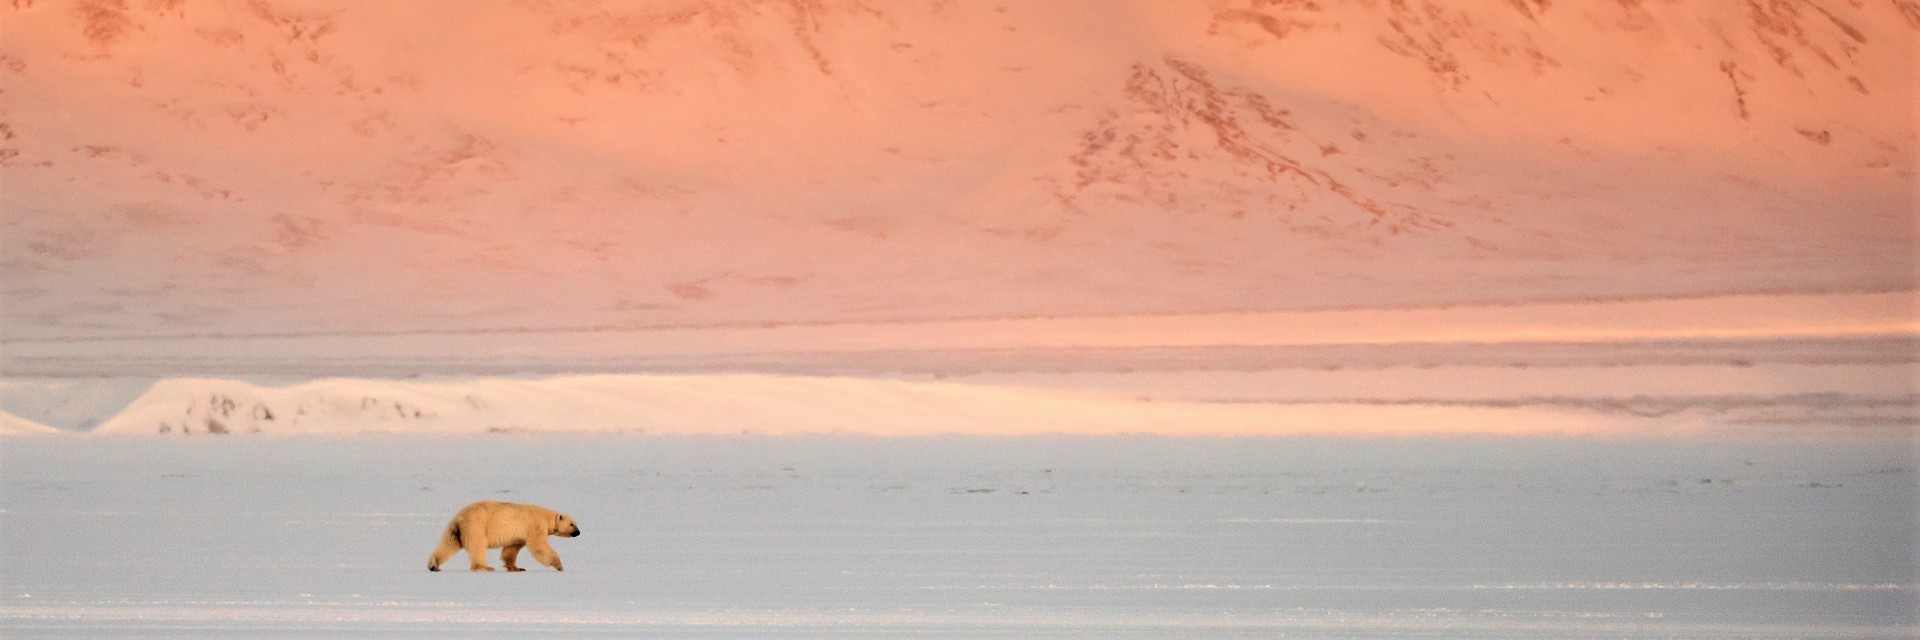 Svalbard invernale